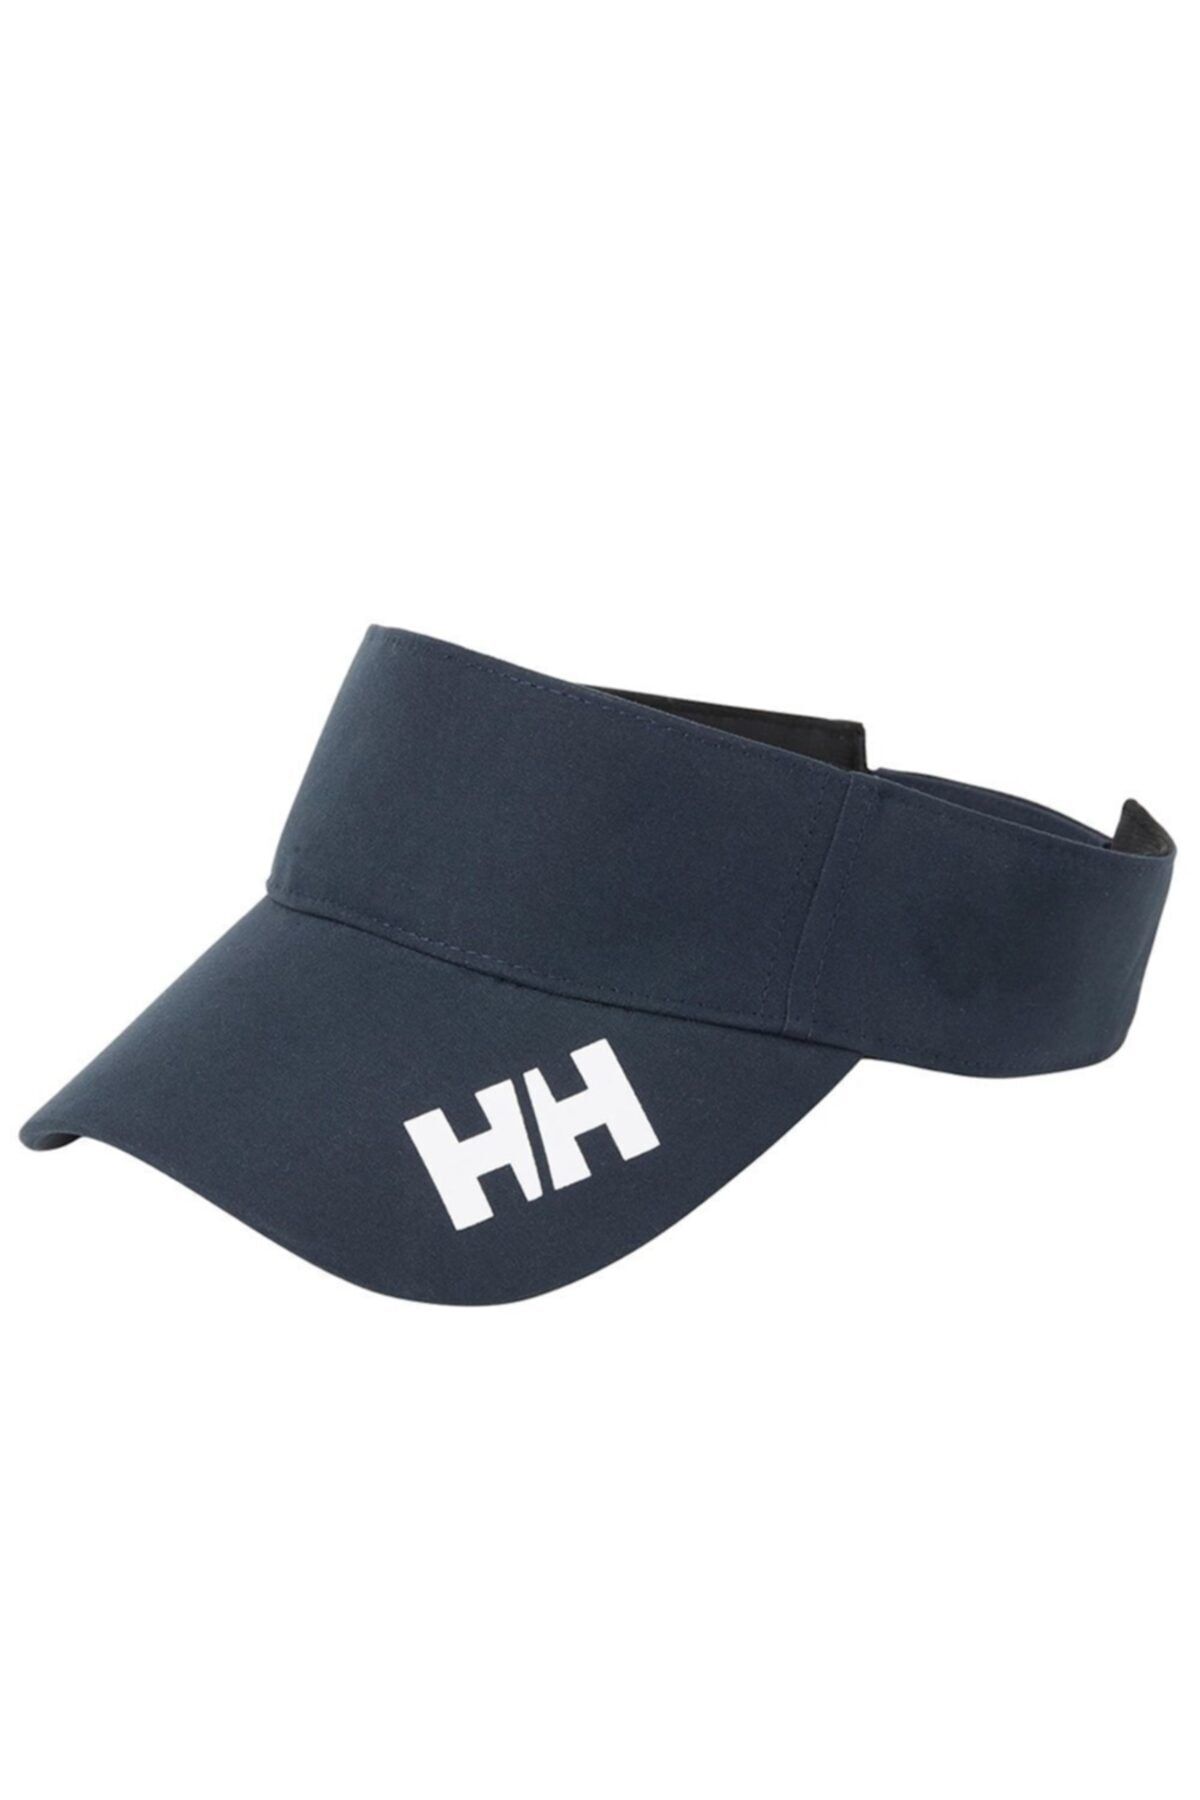 Helly Hansen Hh Logo Visor Cap